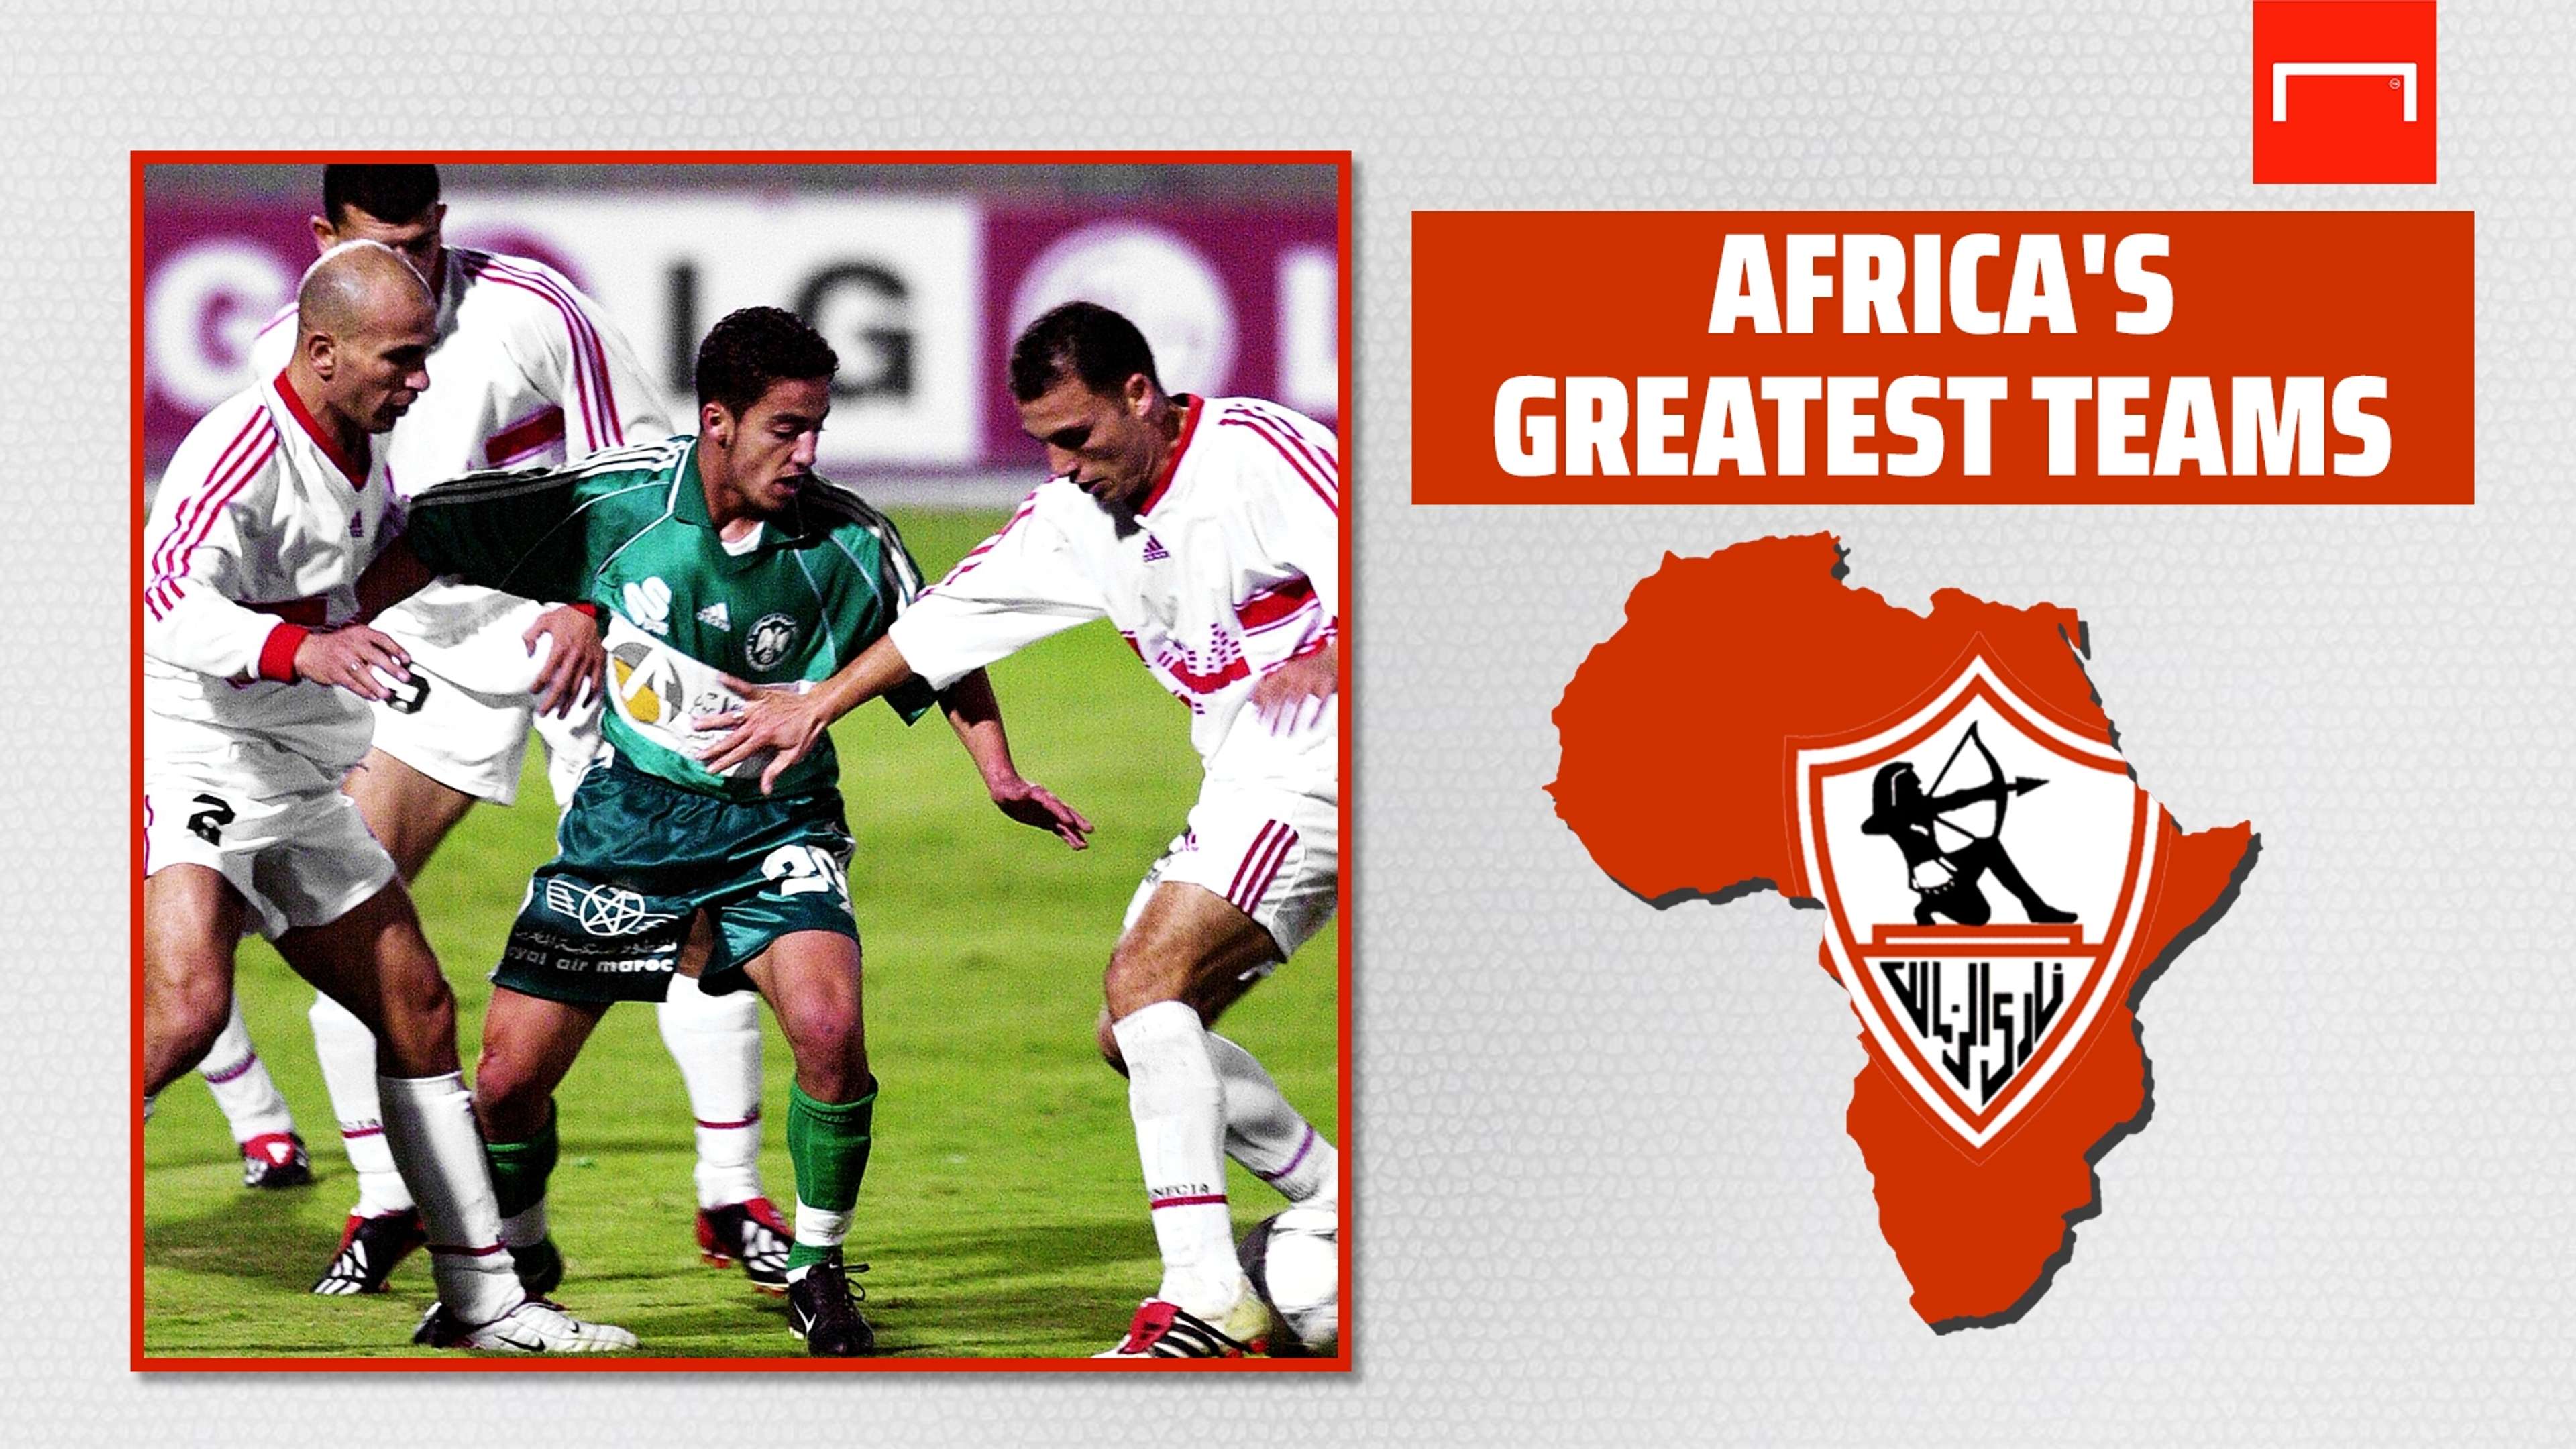 Africa's greatest teams - Zamalek SC